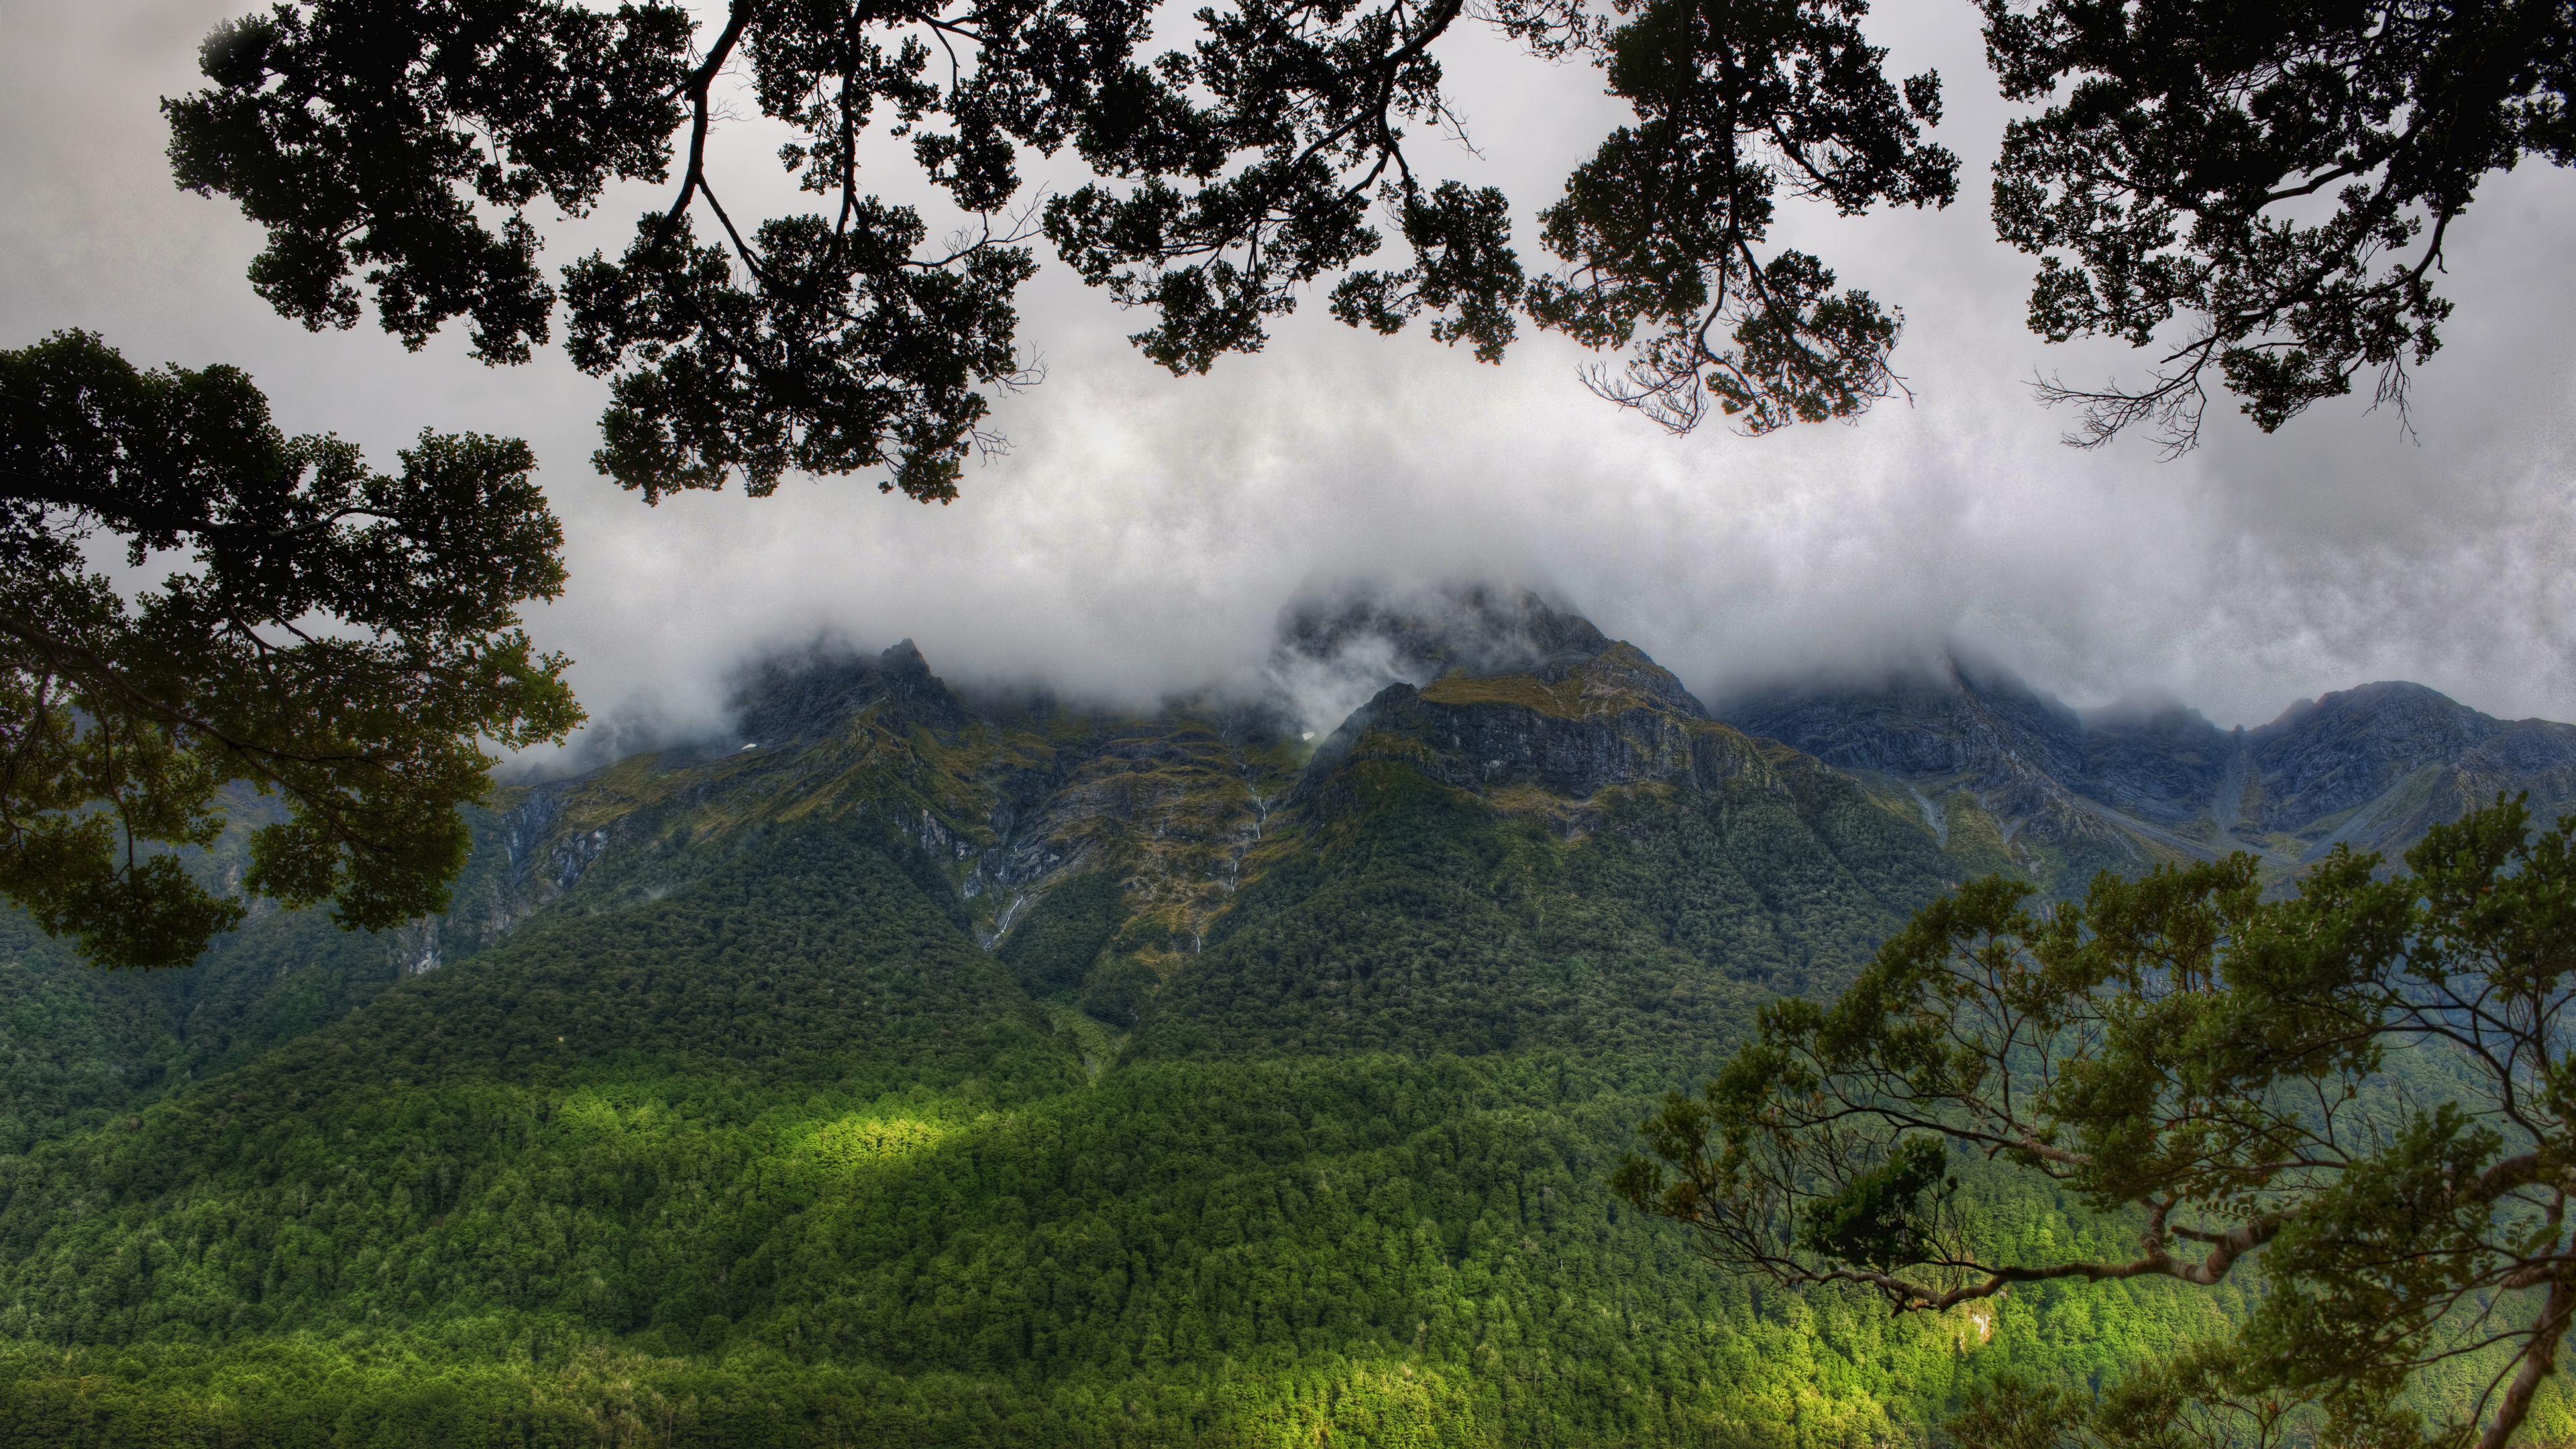 General 3840x2160 Trey Ratcliff photography landscape mountains forest mist nature branch